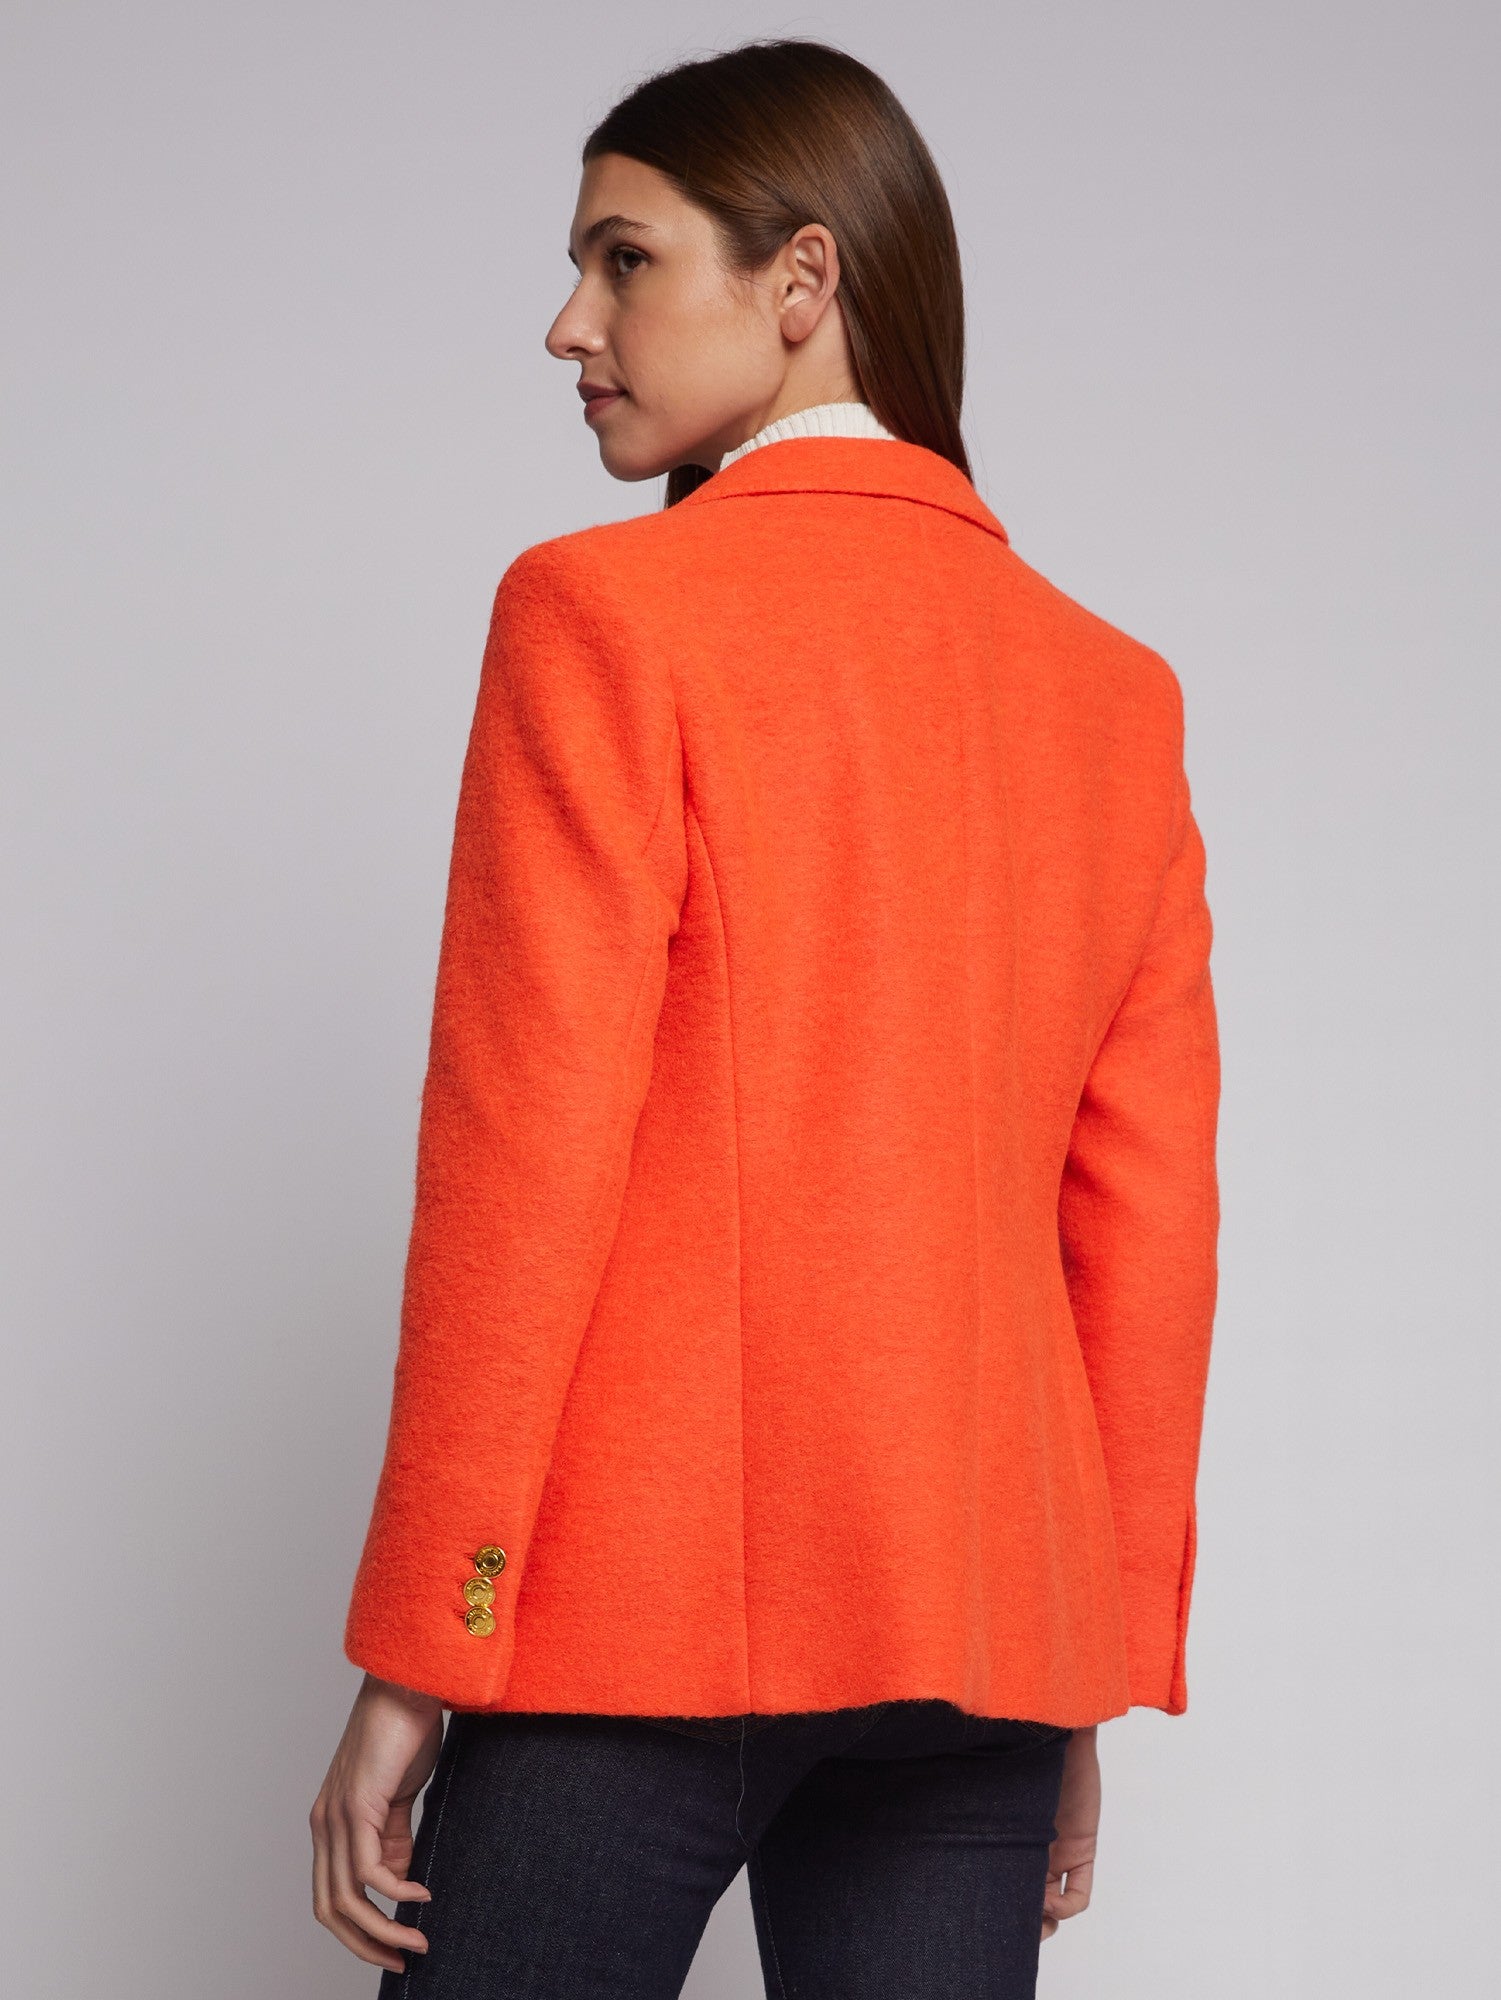 Vilagallo - Harlow Jacket / Orange Neon